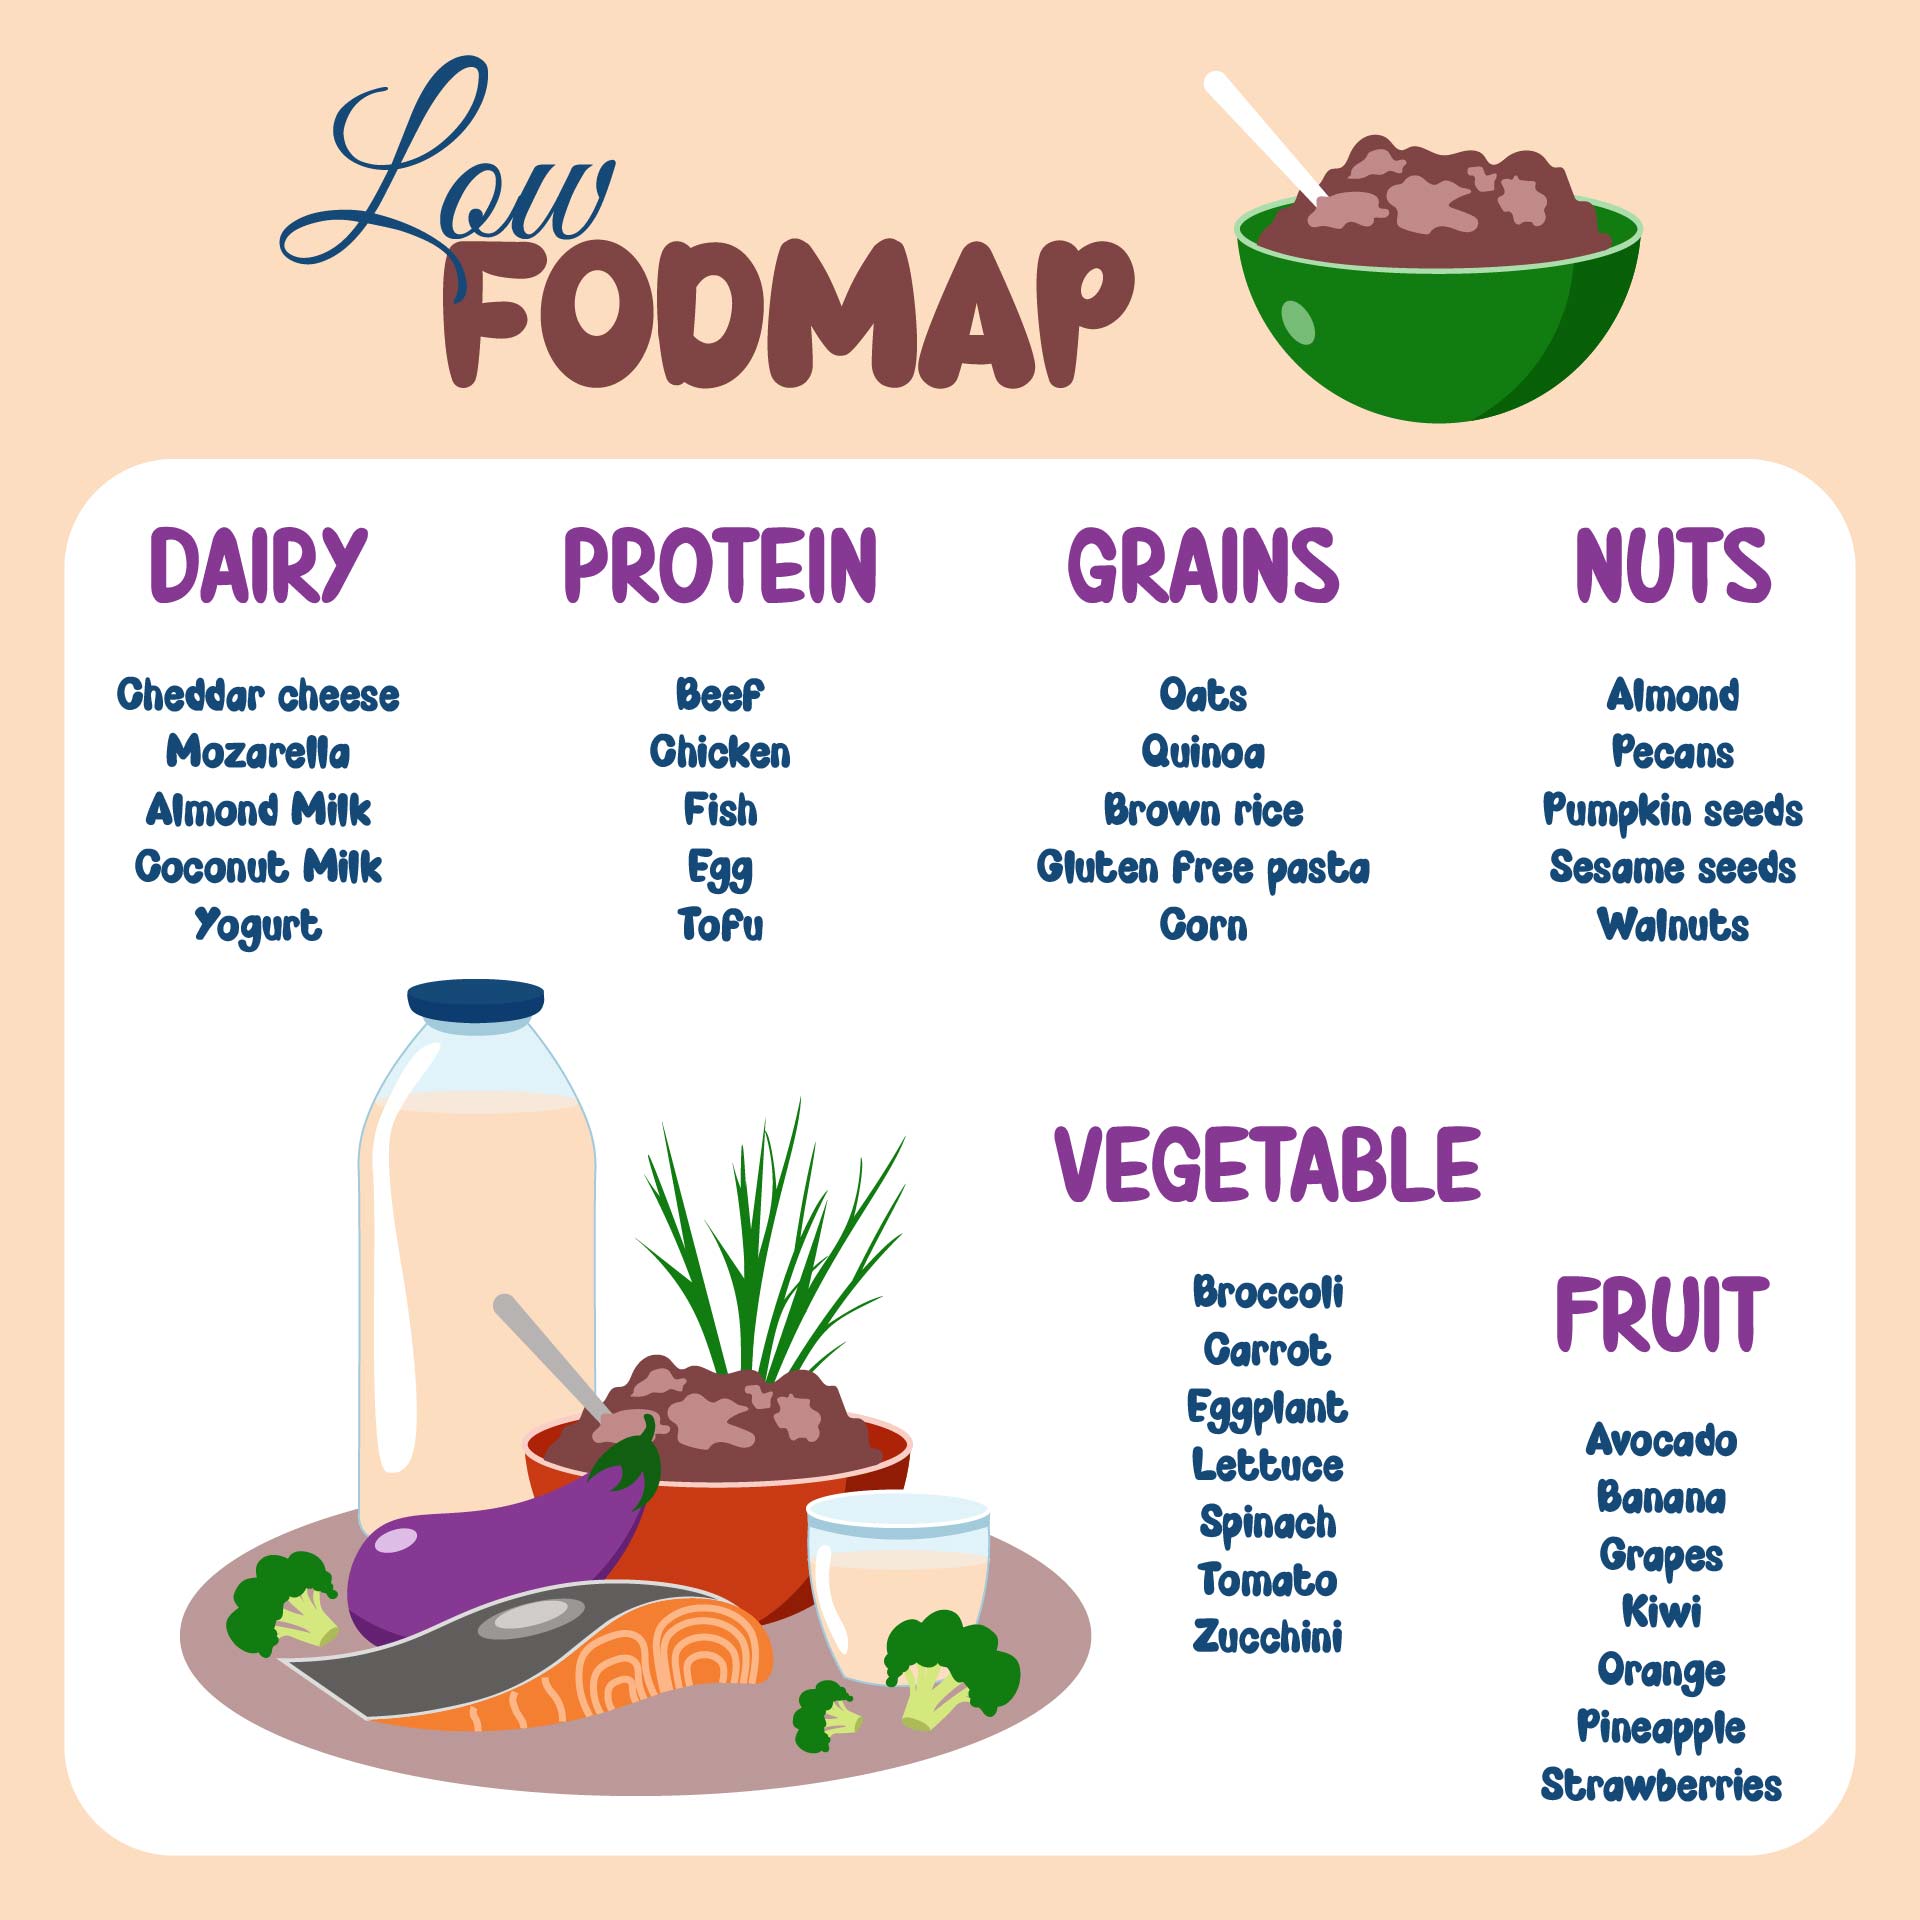 Fodmap Diet Food List Printable